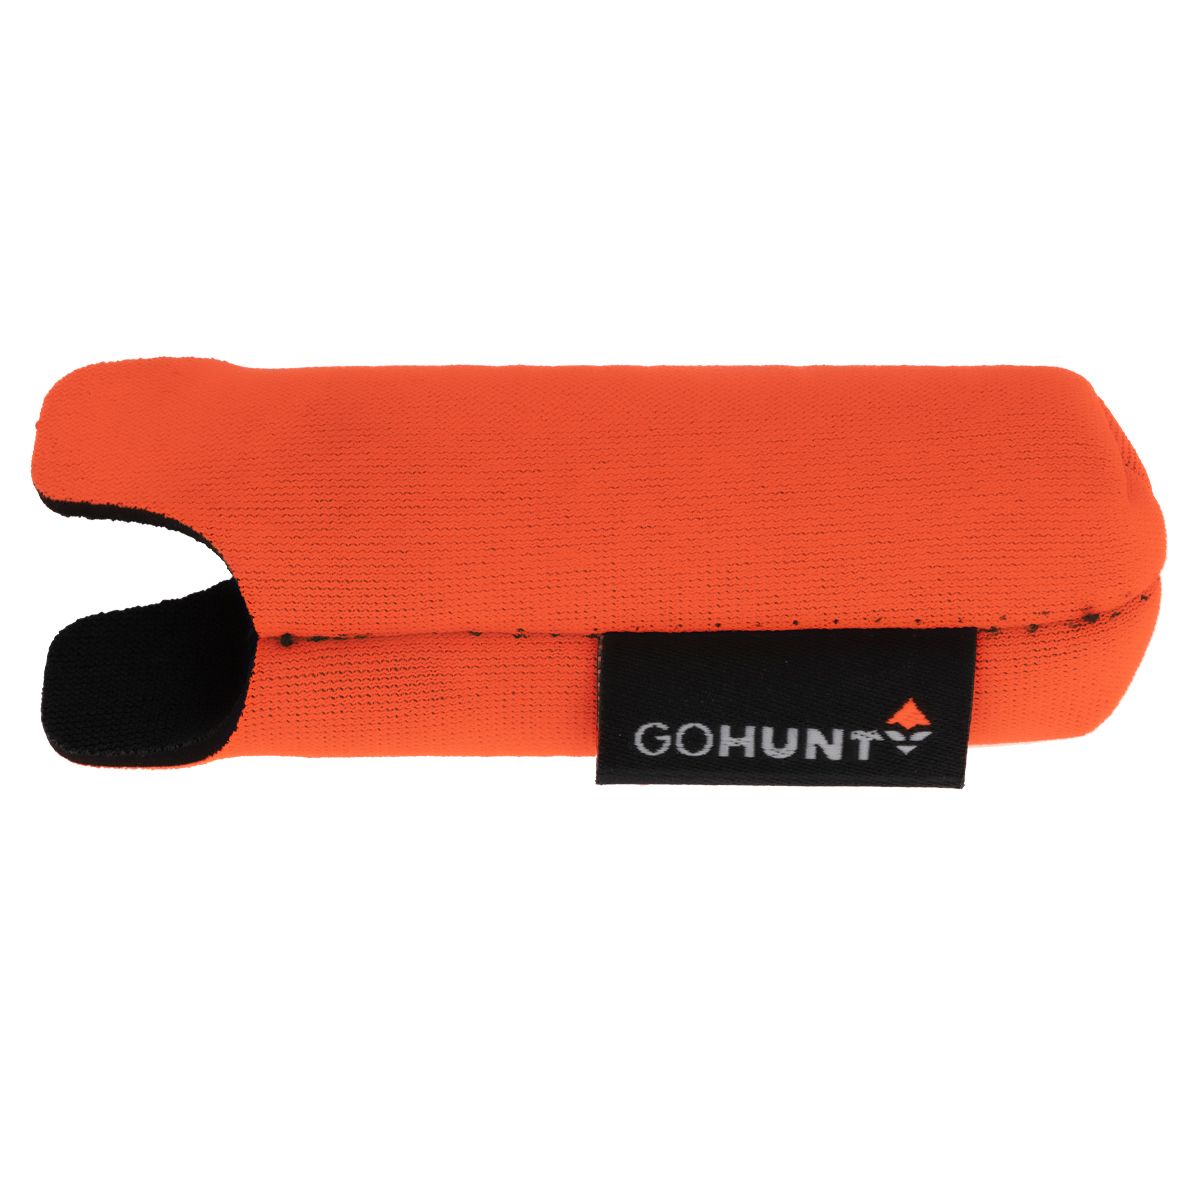 GOHUNT Barrel Topper in Orange by GOHUNT | GOHUNT - GOHUNT Shop